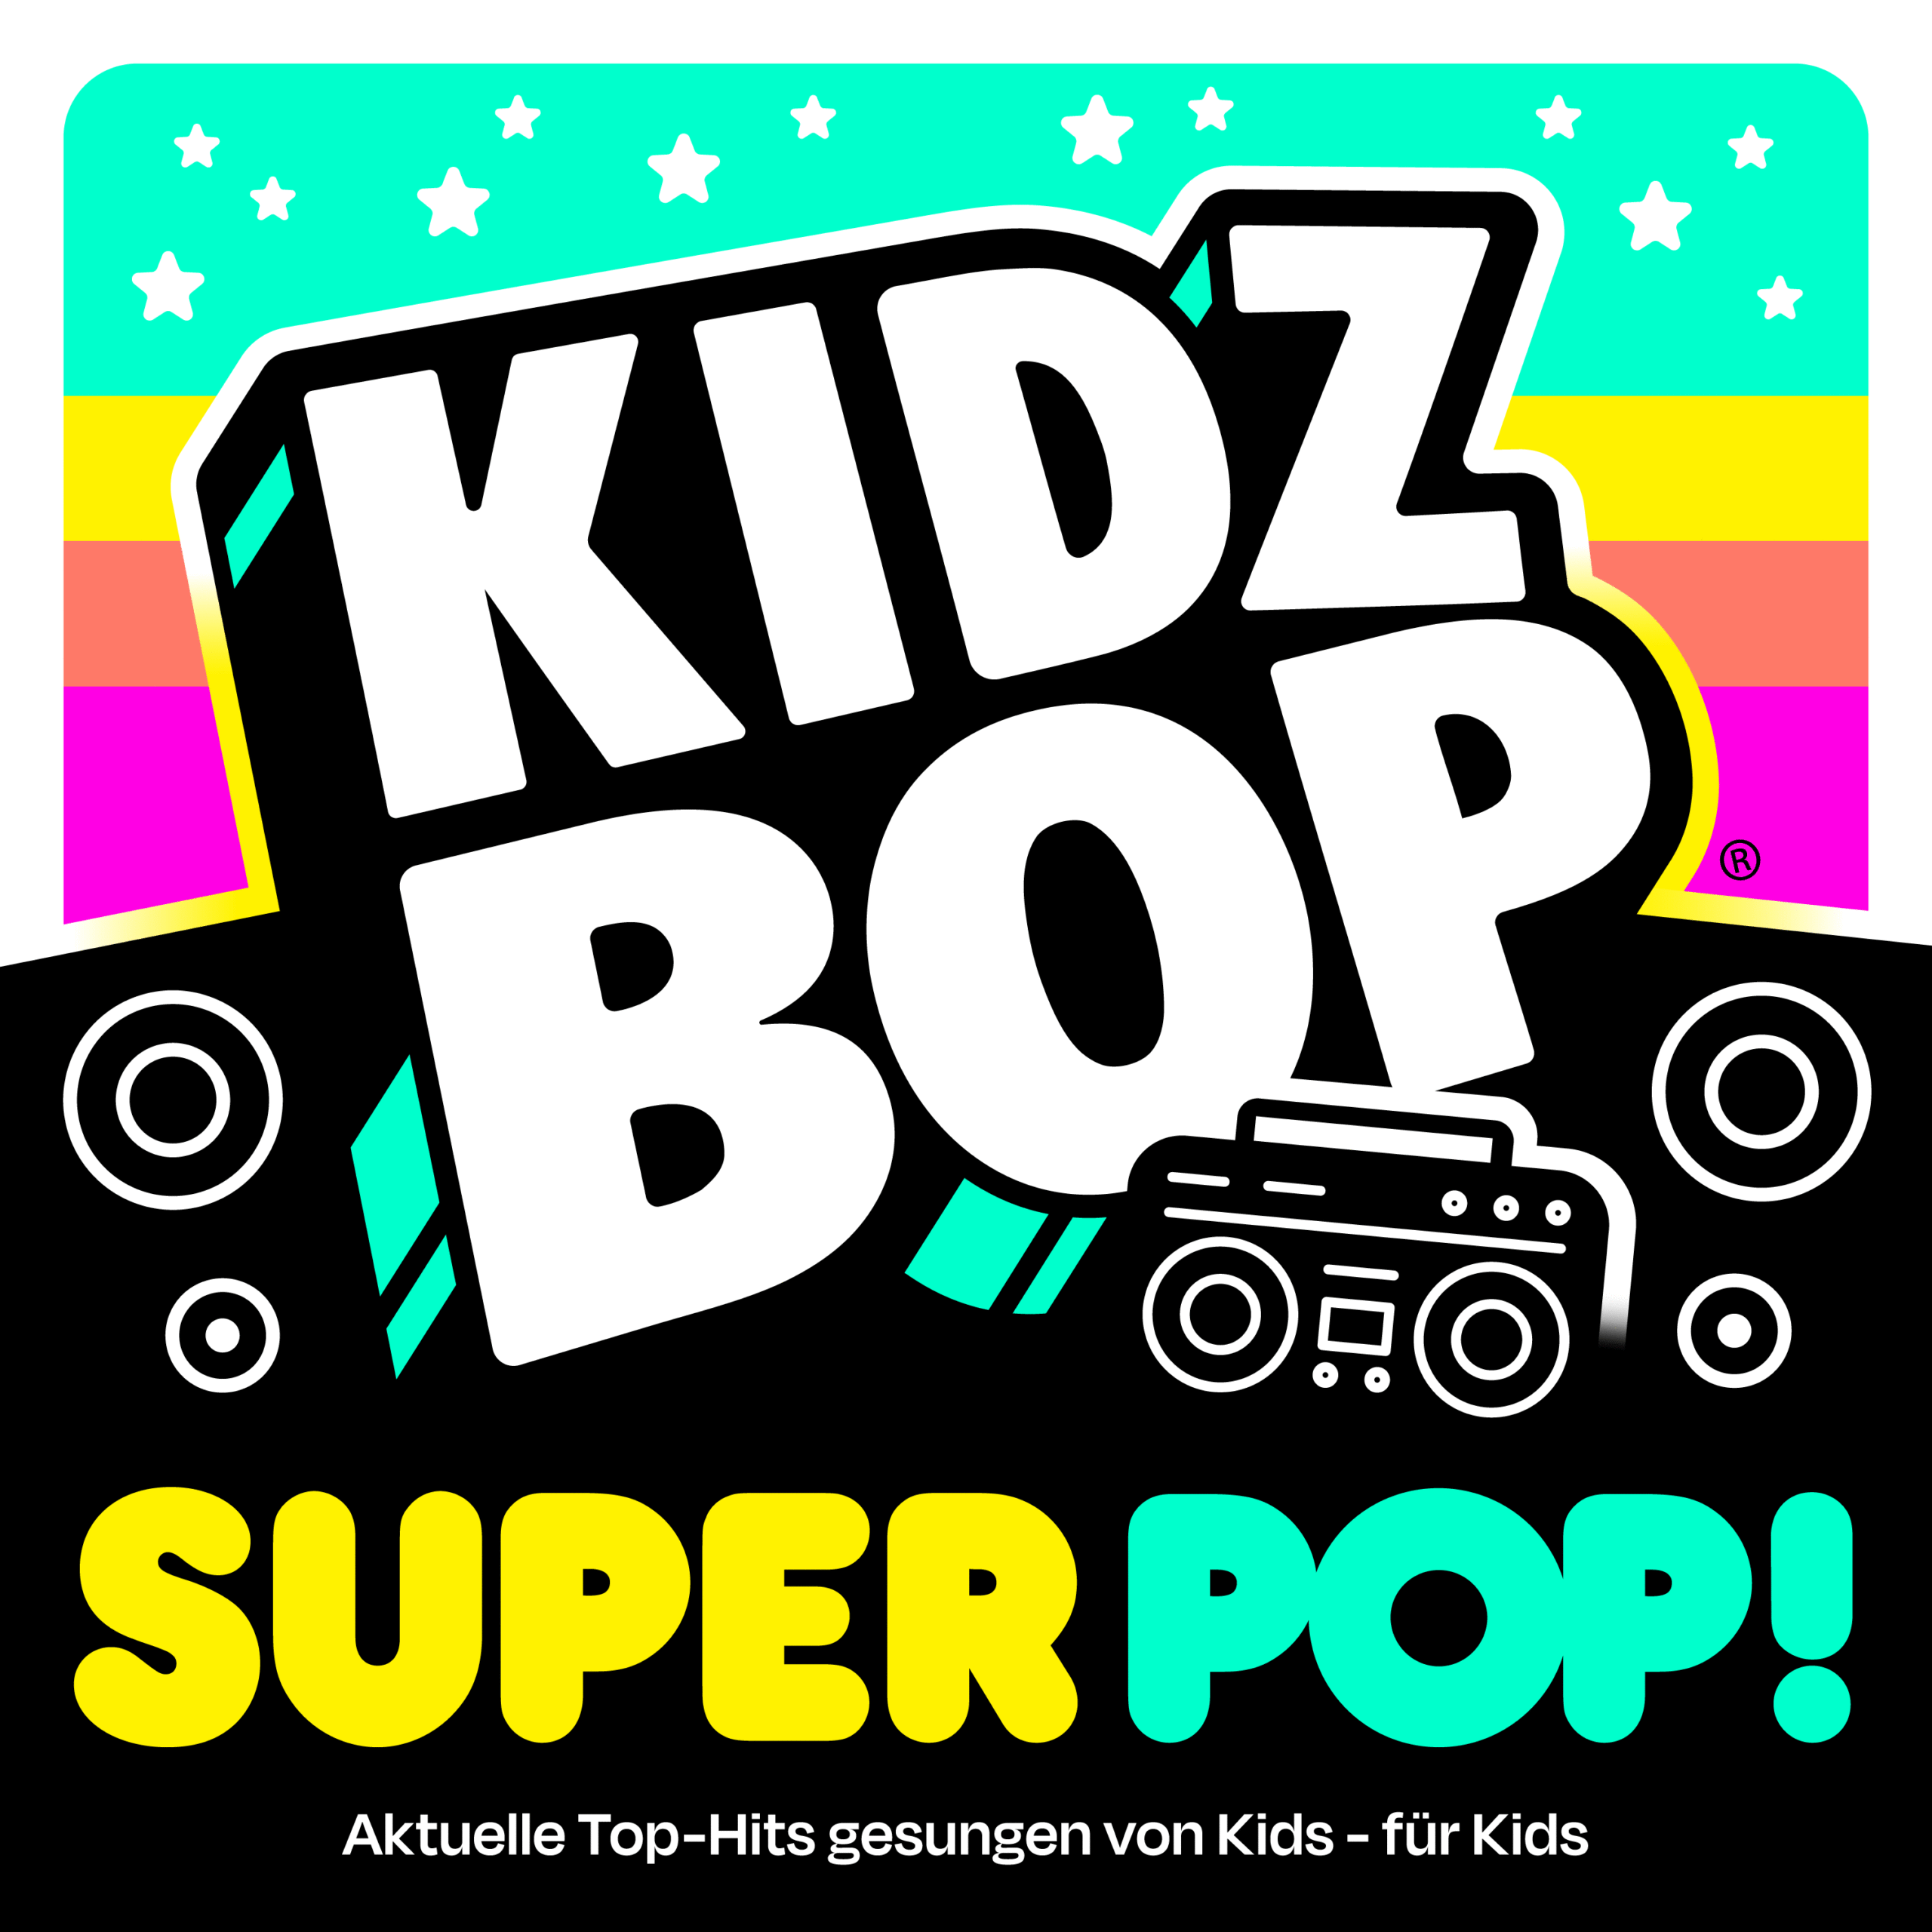 Featured image for “KIDZ BOP Super POP!”